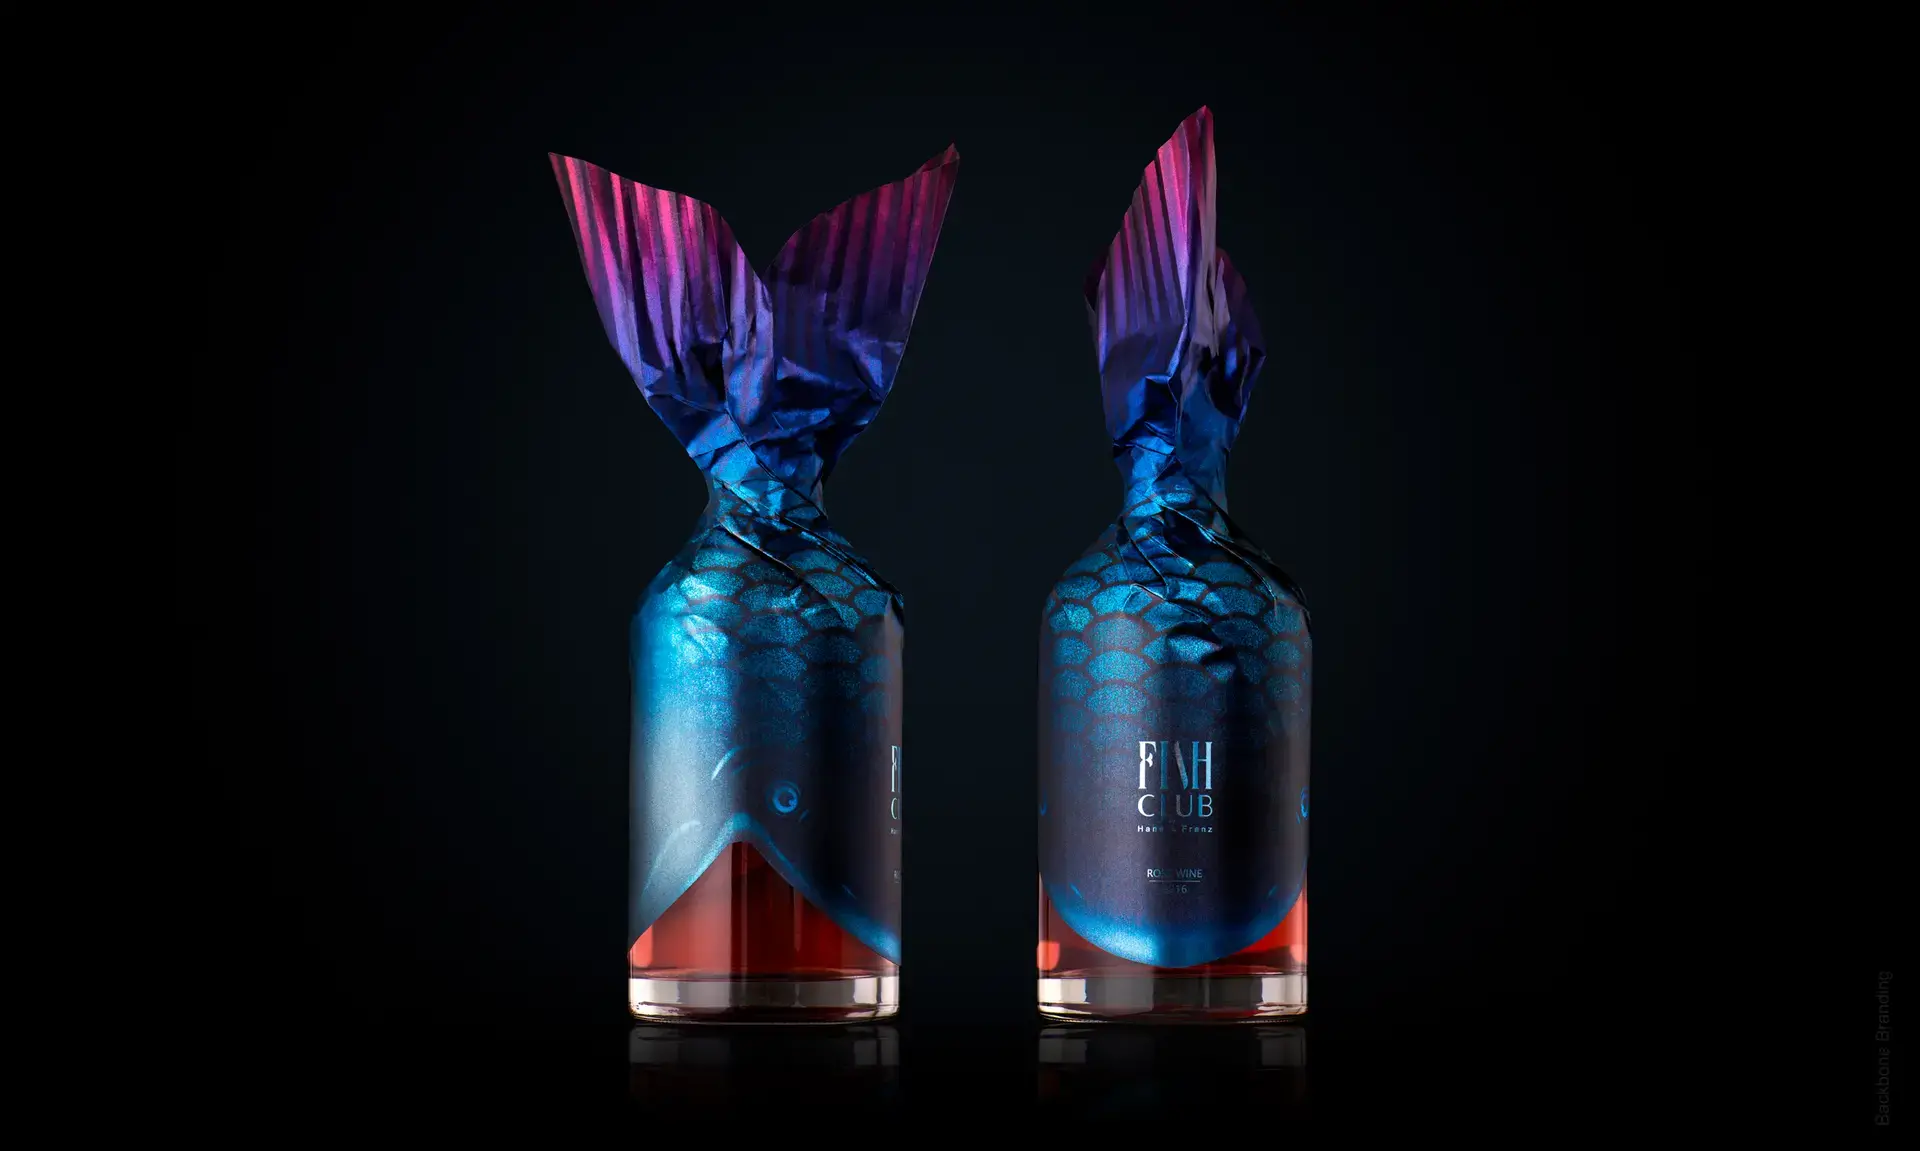 Blogduwebdesign packaging habillage bouteille original fishclub 2